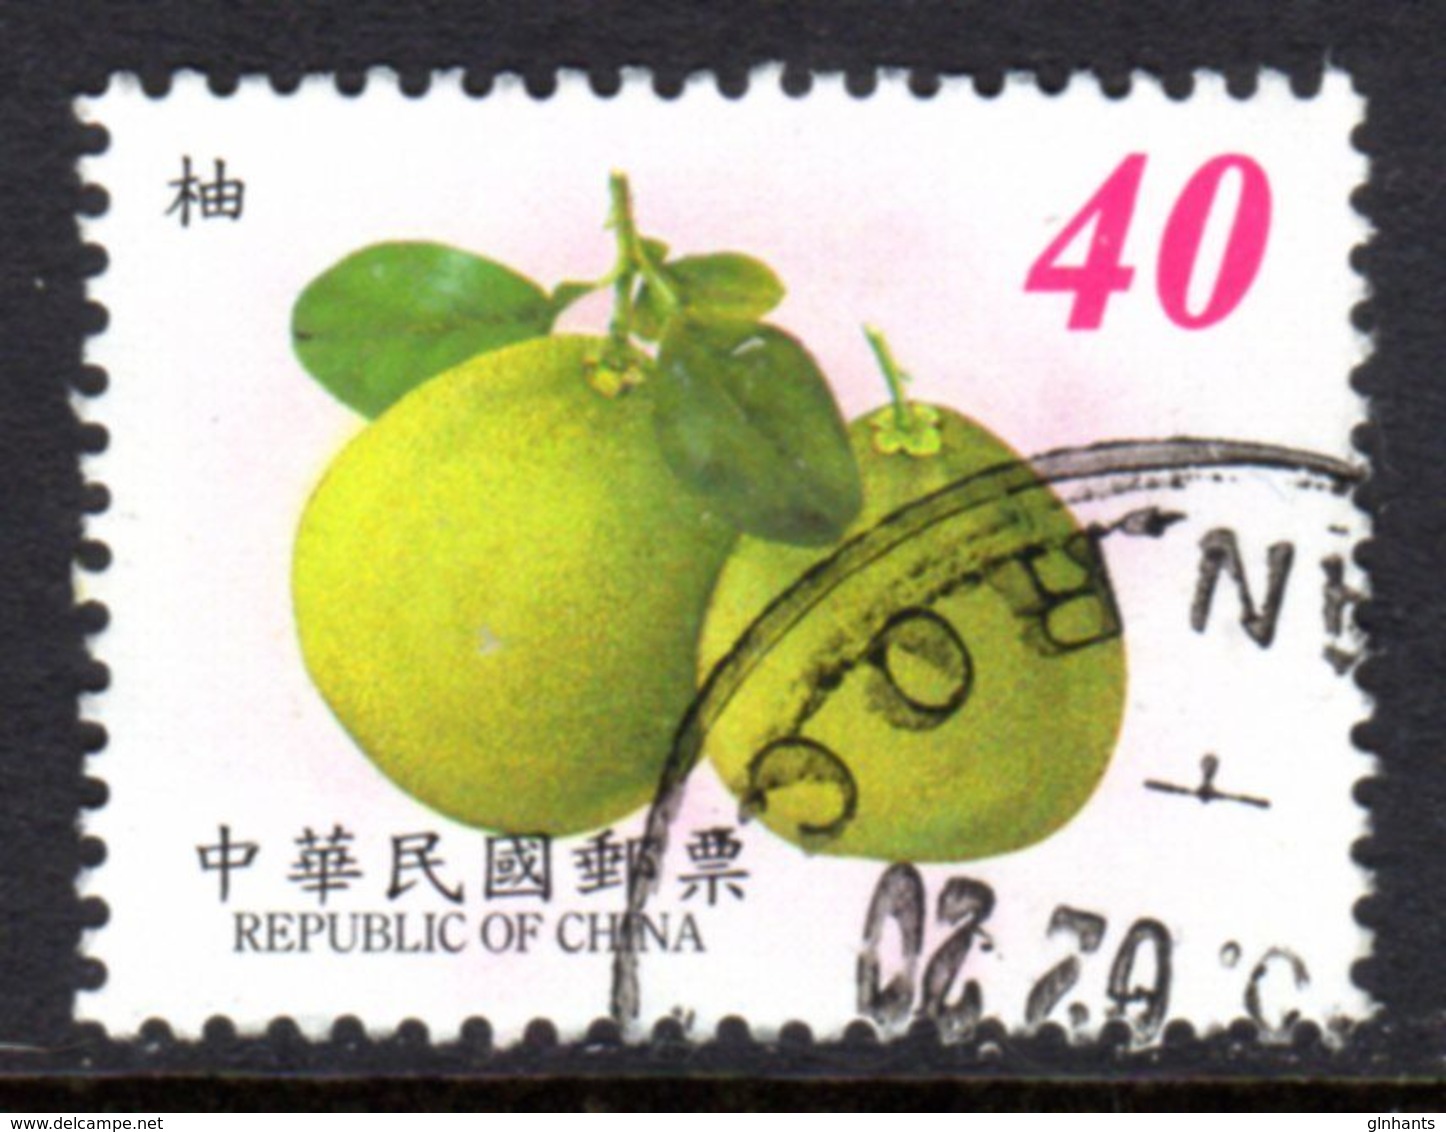 TAIWAN ROC - 2001 FRUITS 2nd SERIES $40 GRAPEFRUIT STAMP FINE USED SG 2735 - Gebraucht